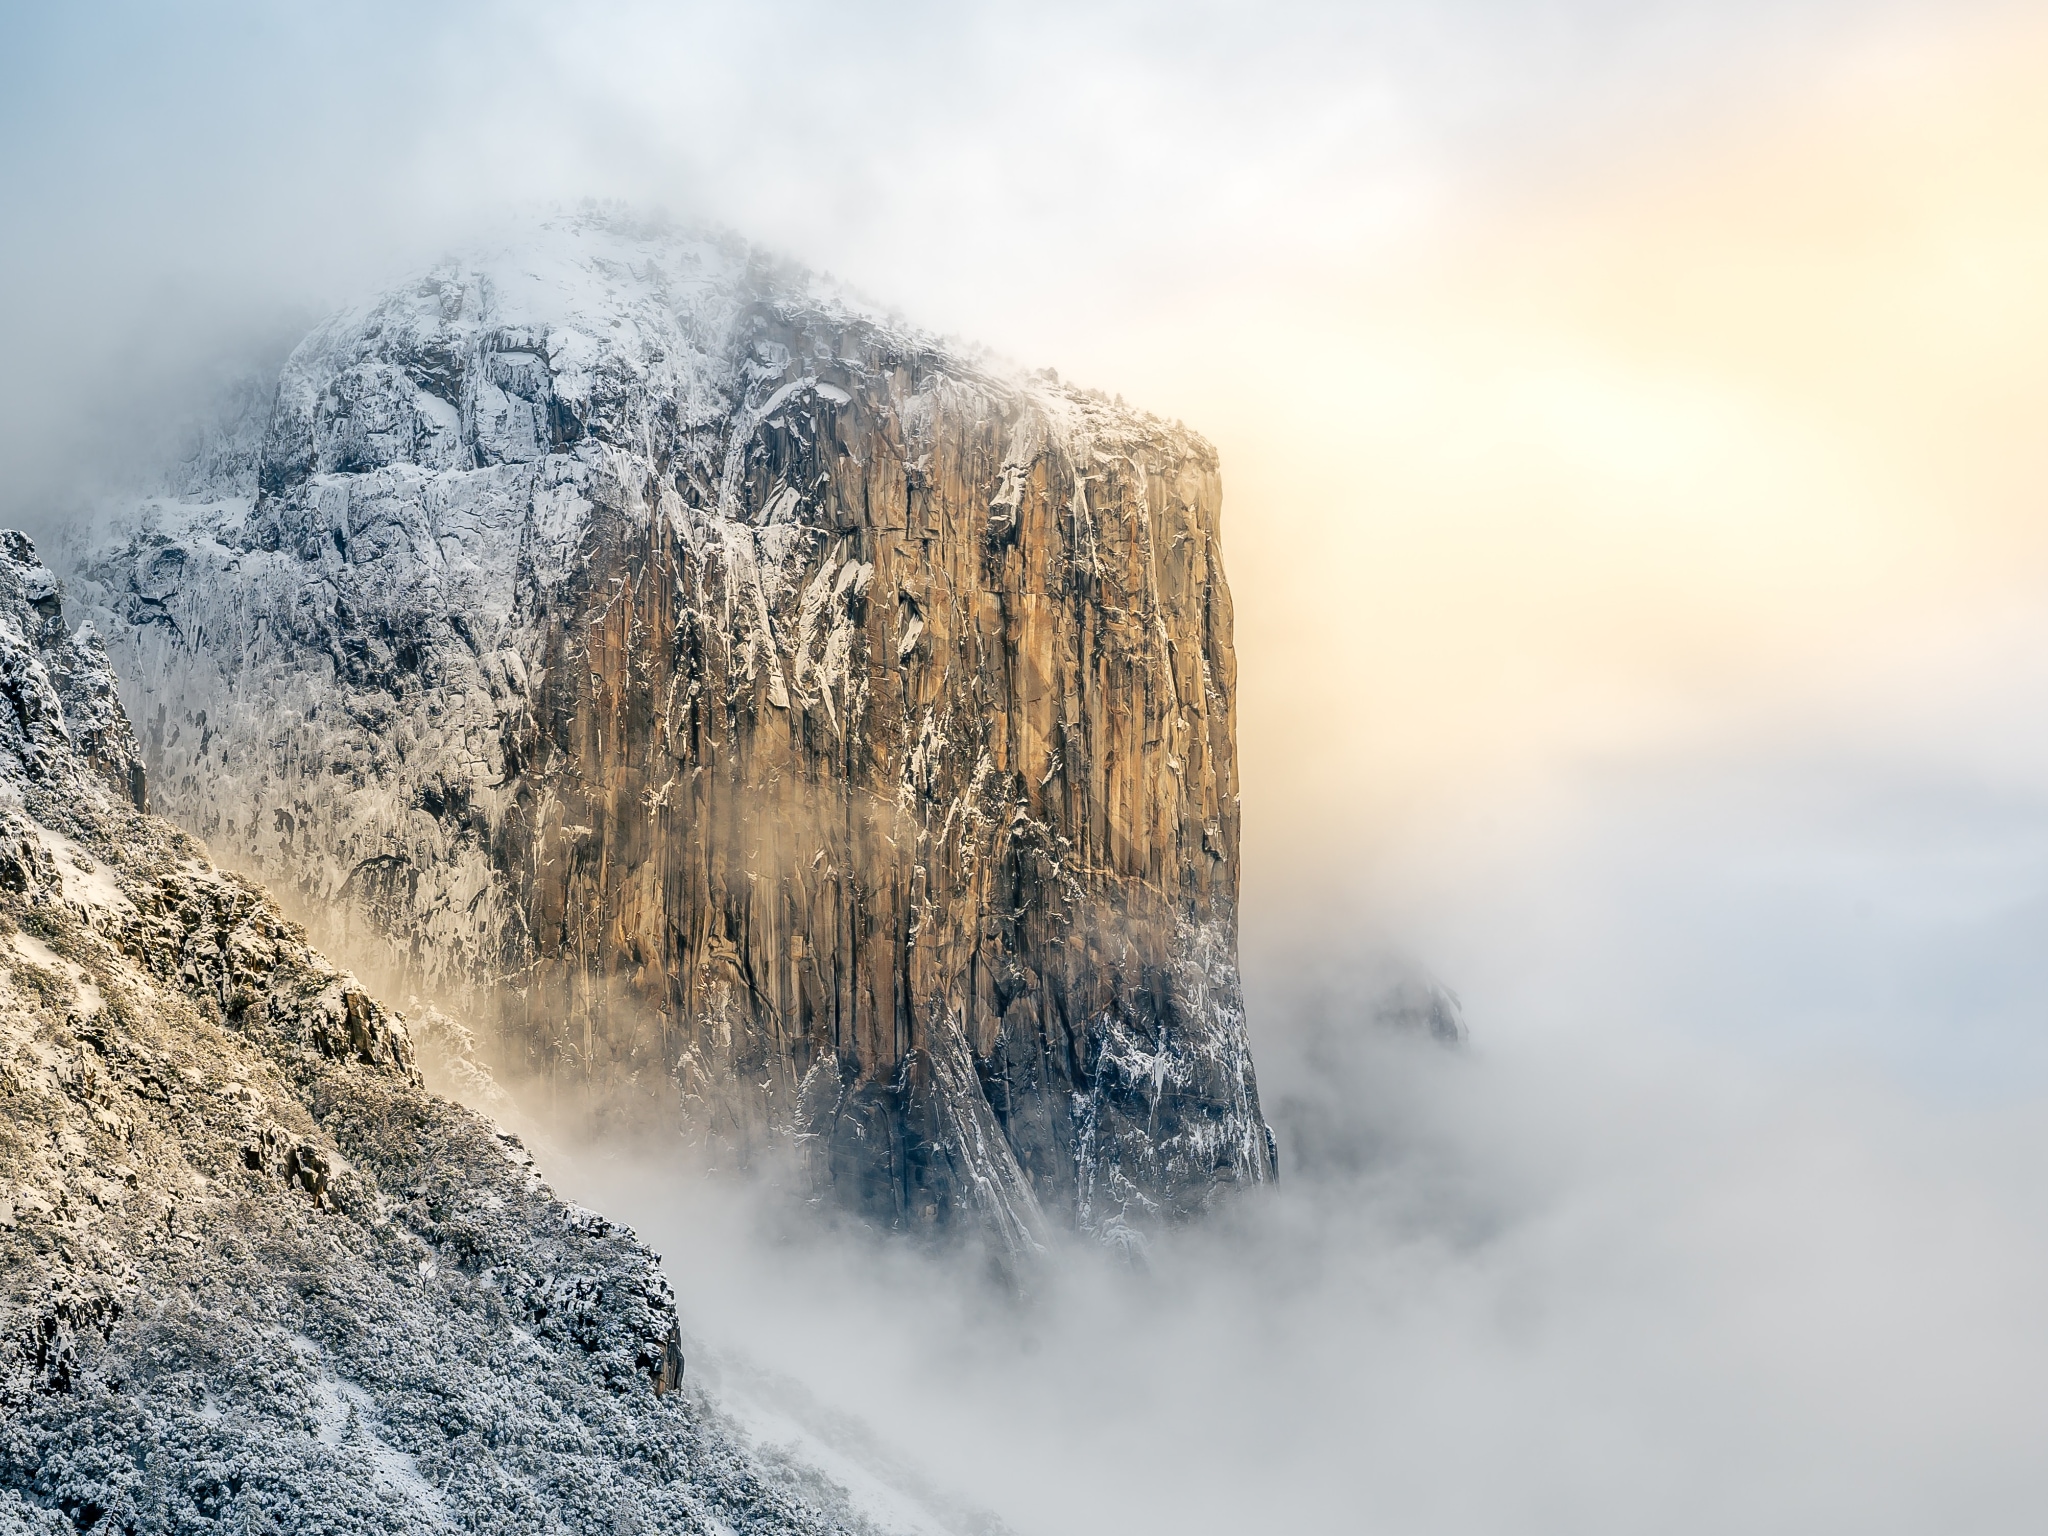 A love letter to Yosemite